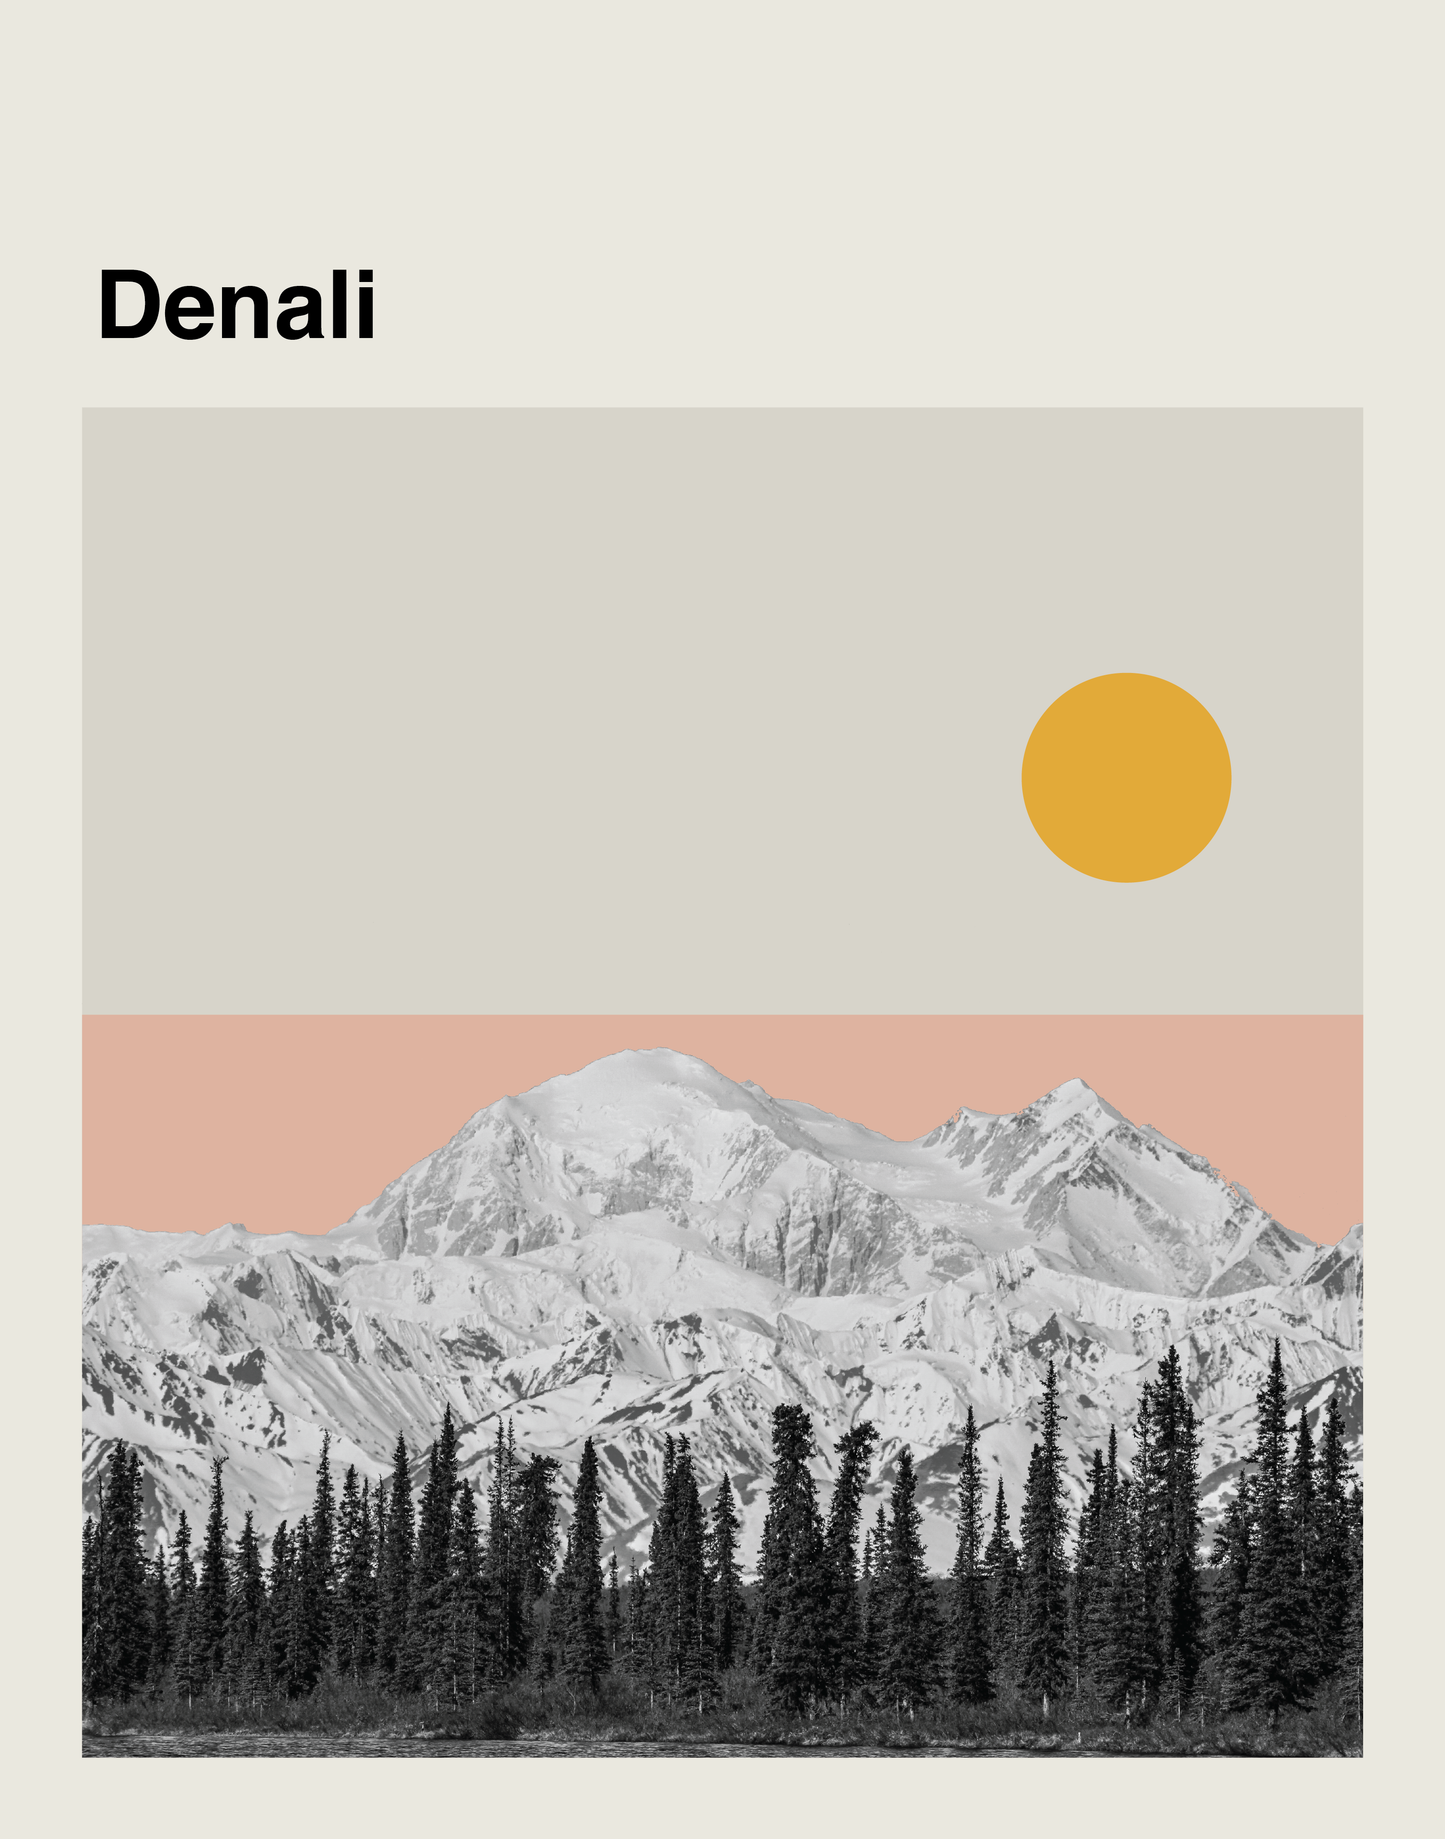 Denali National Park Poster